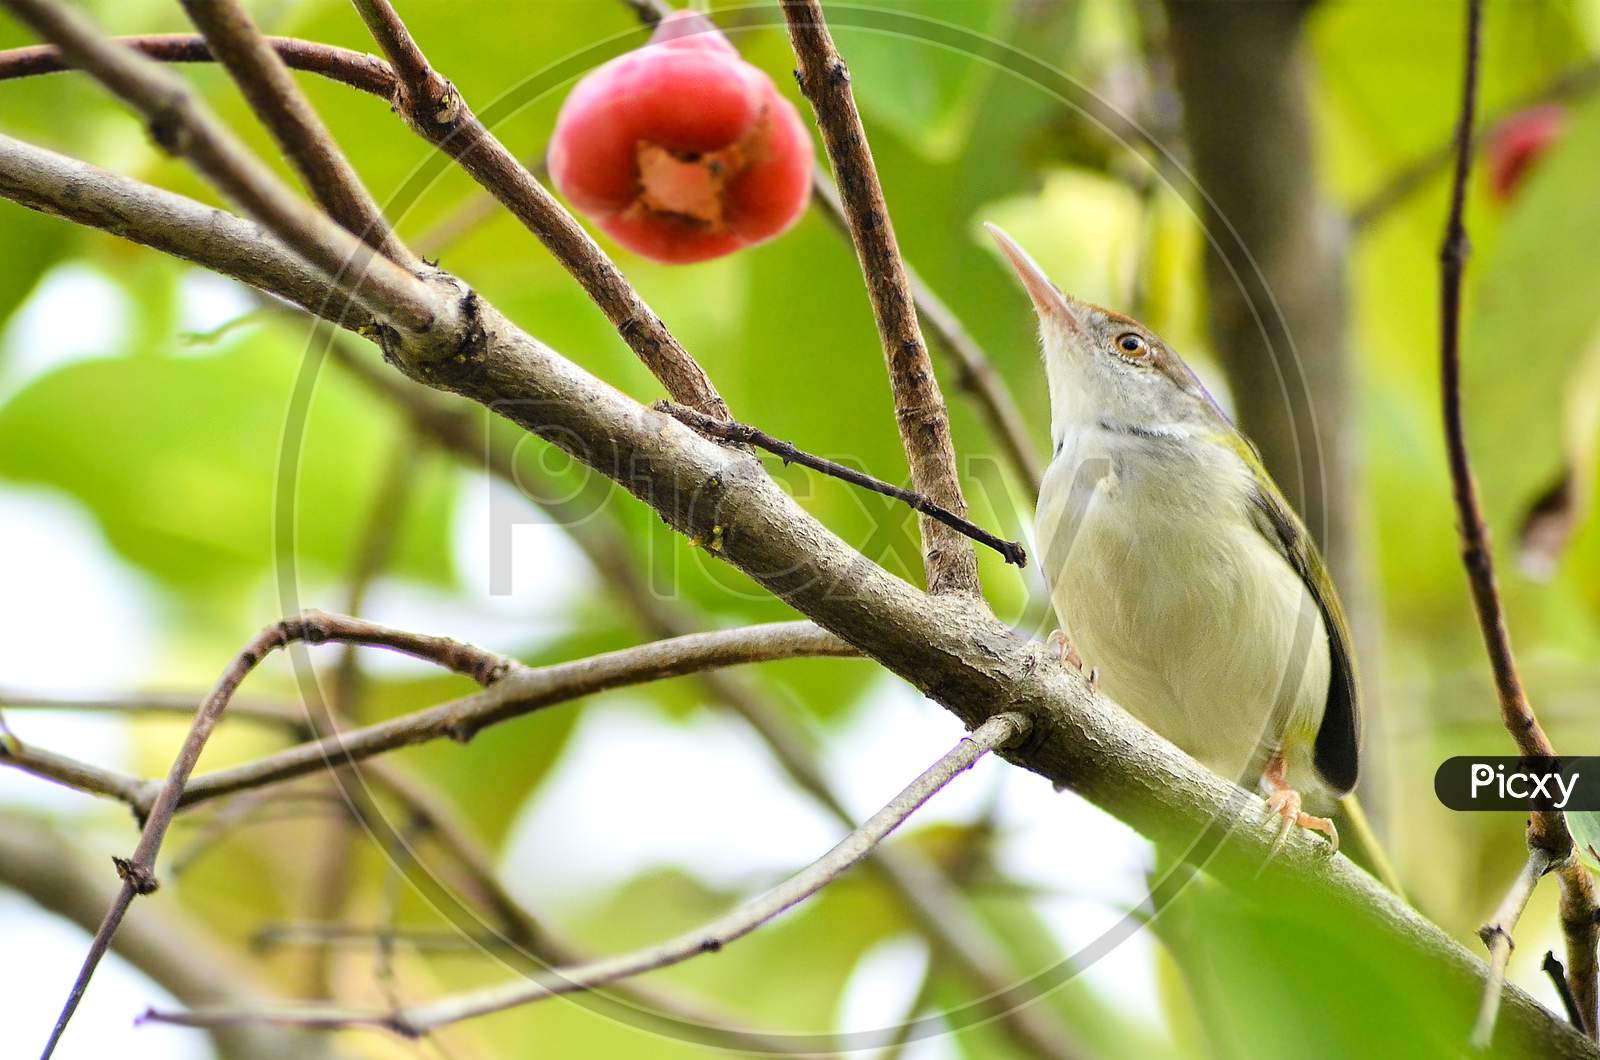 Tailor Bird Looking at the Fruit